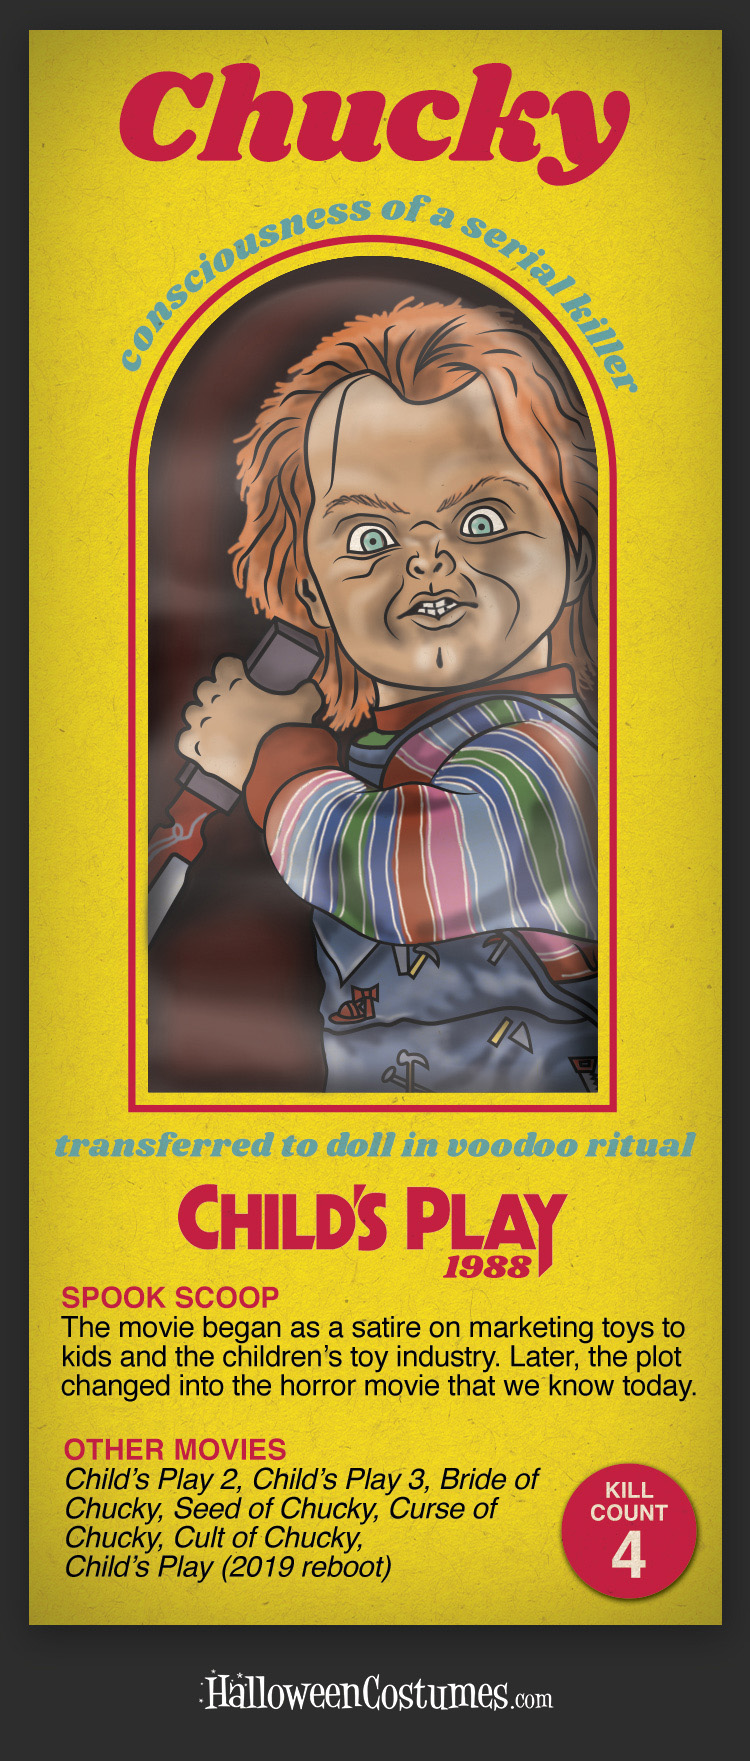 CHUCKY - CHILD'S PLAY (1988)